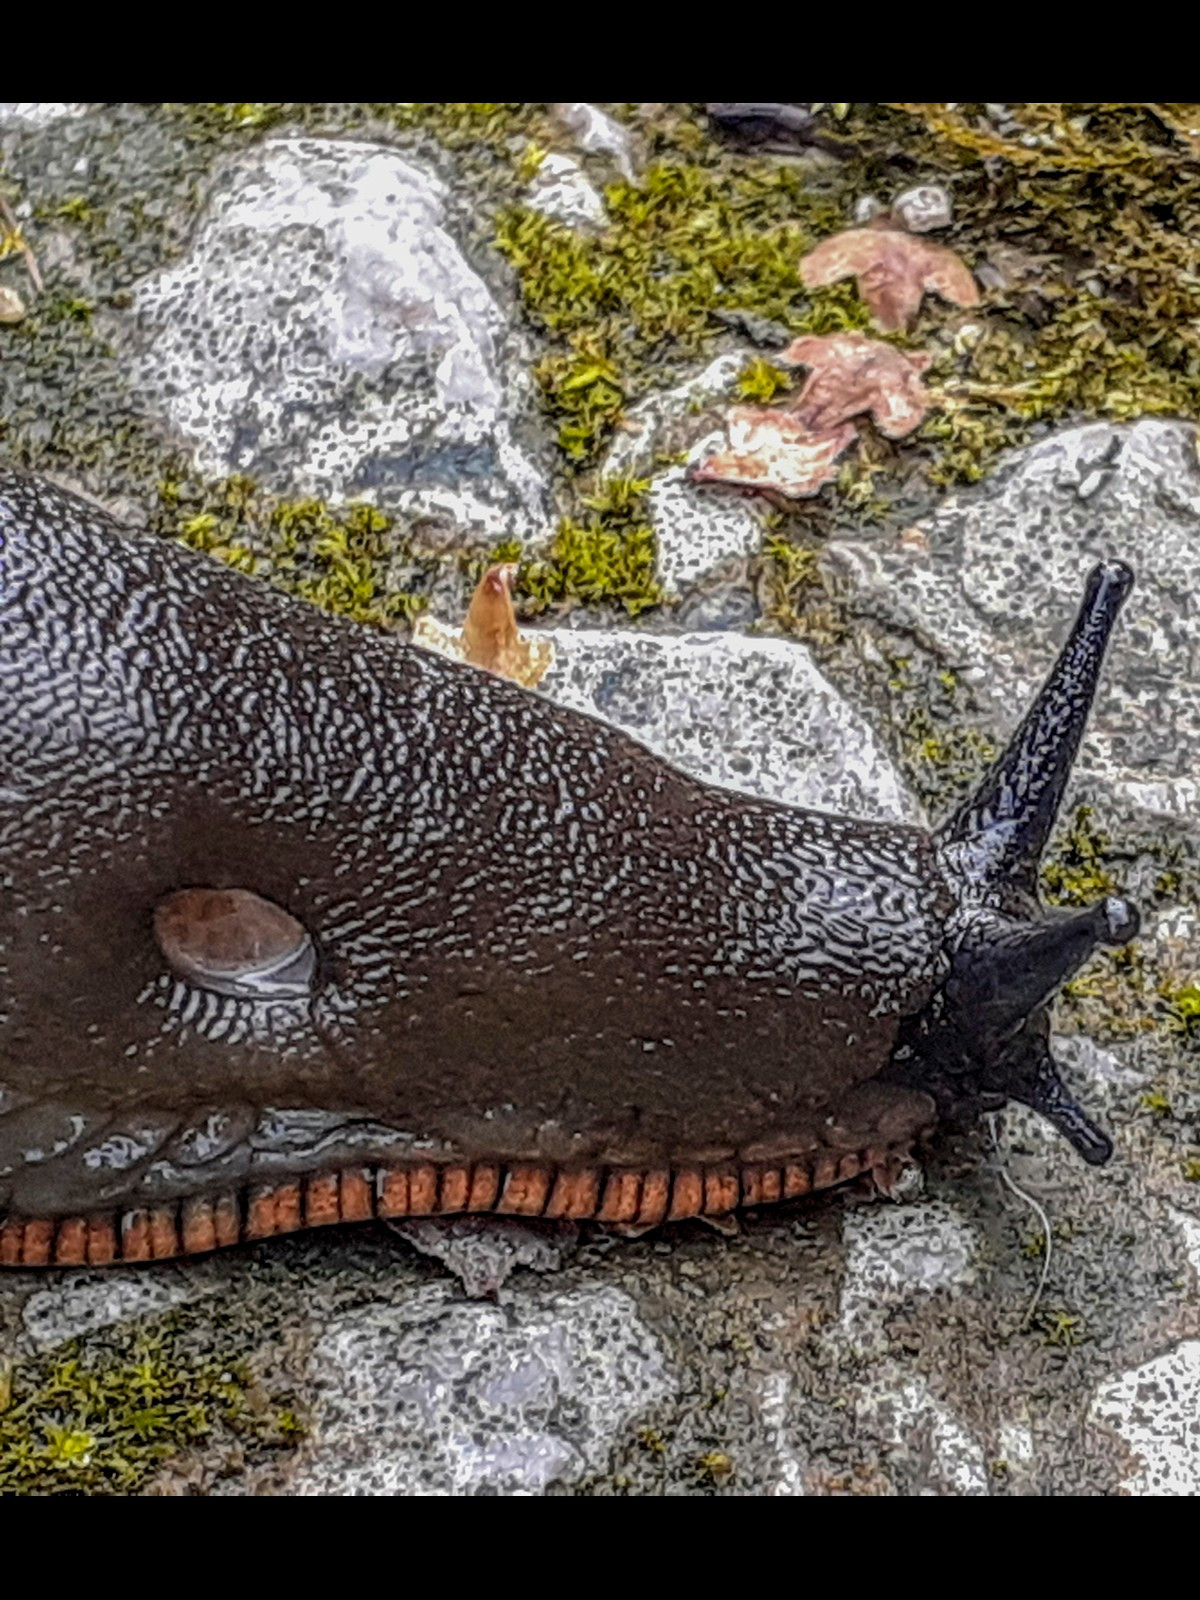 Arion Ater Large Black Slug